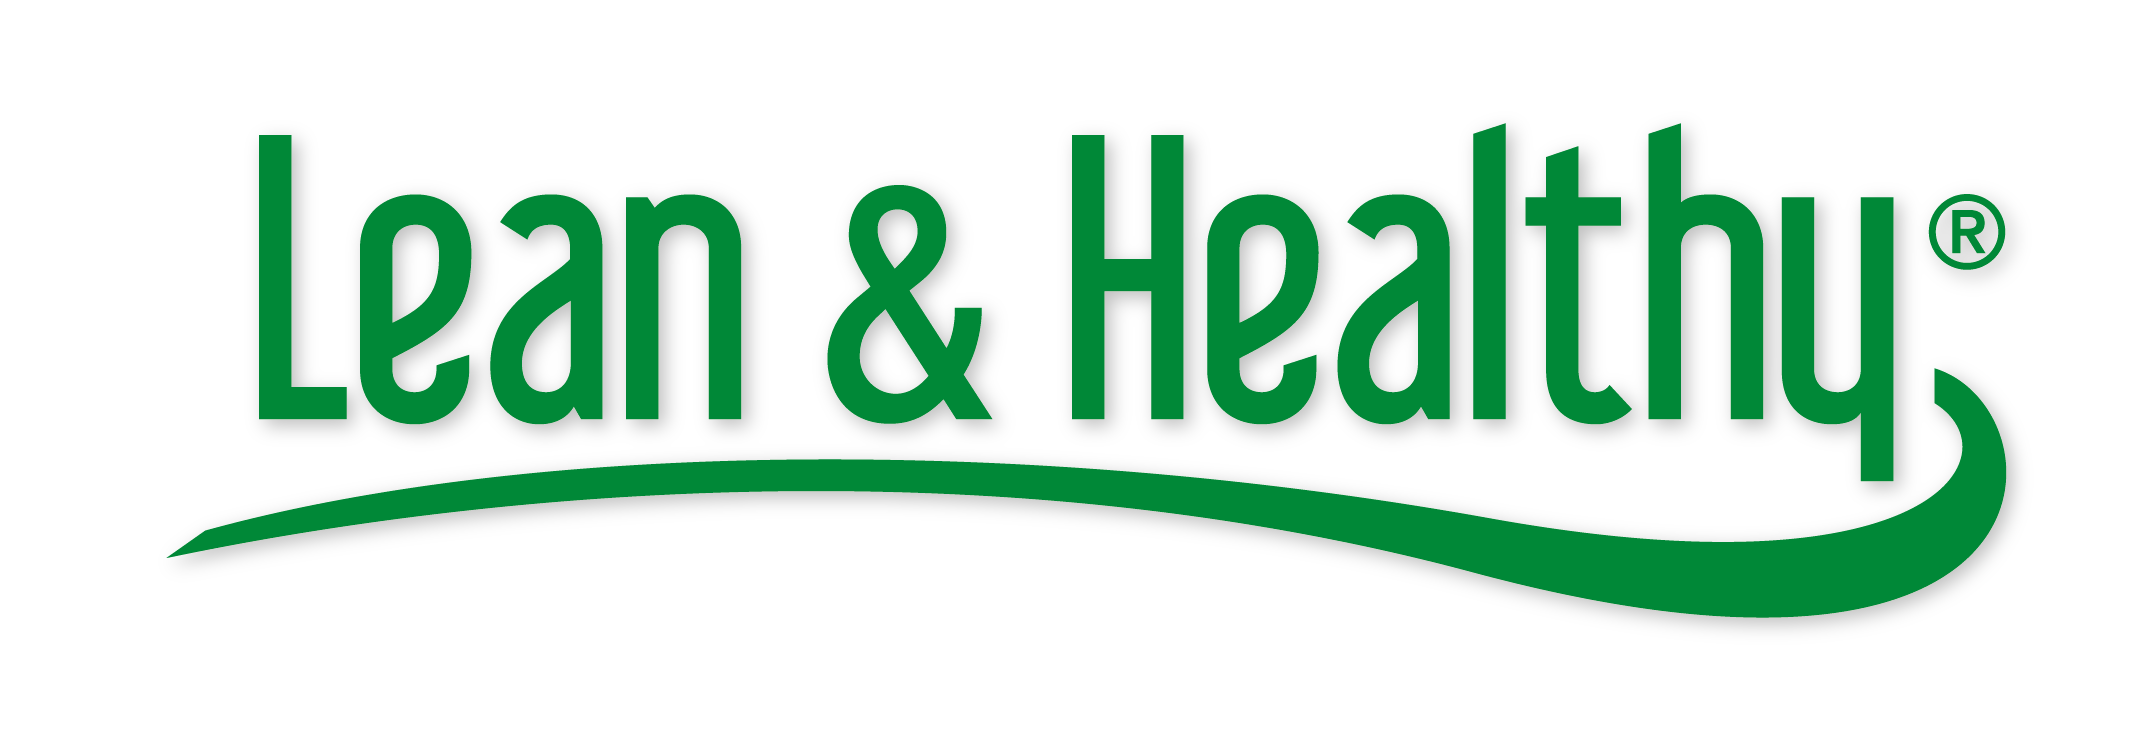 Lean & healthy Logo